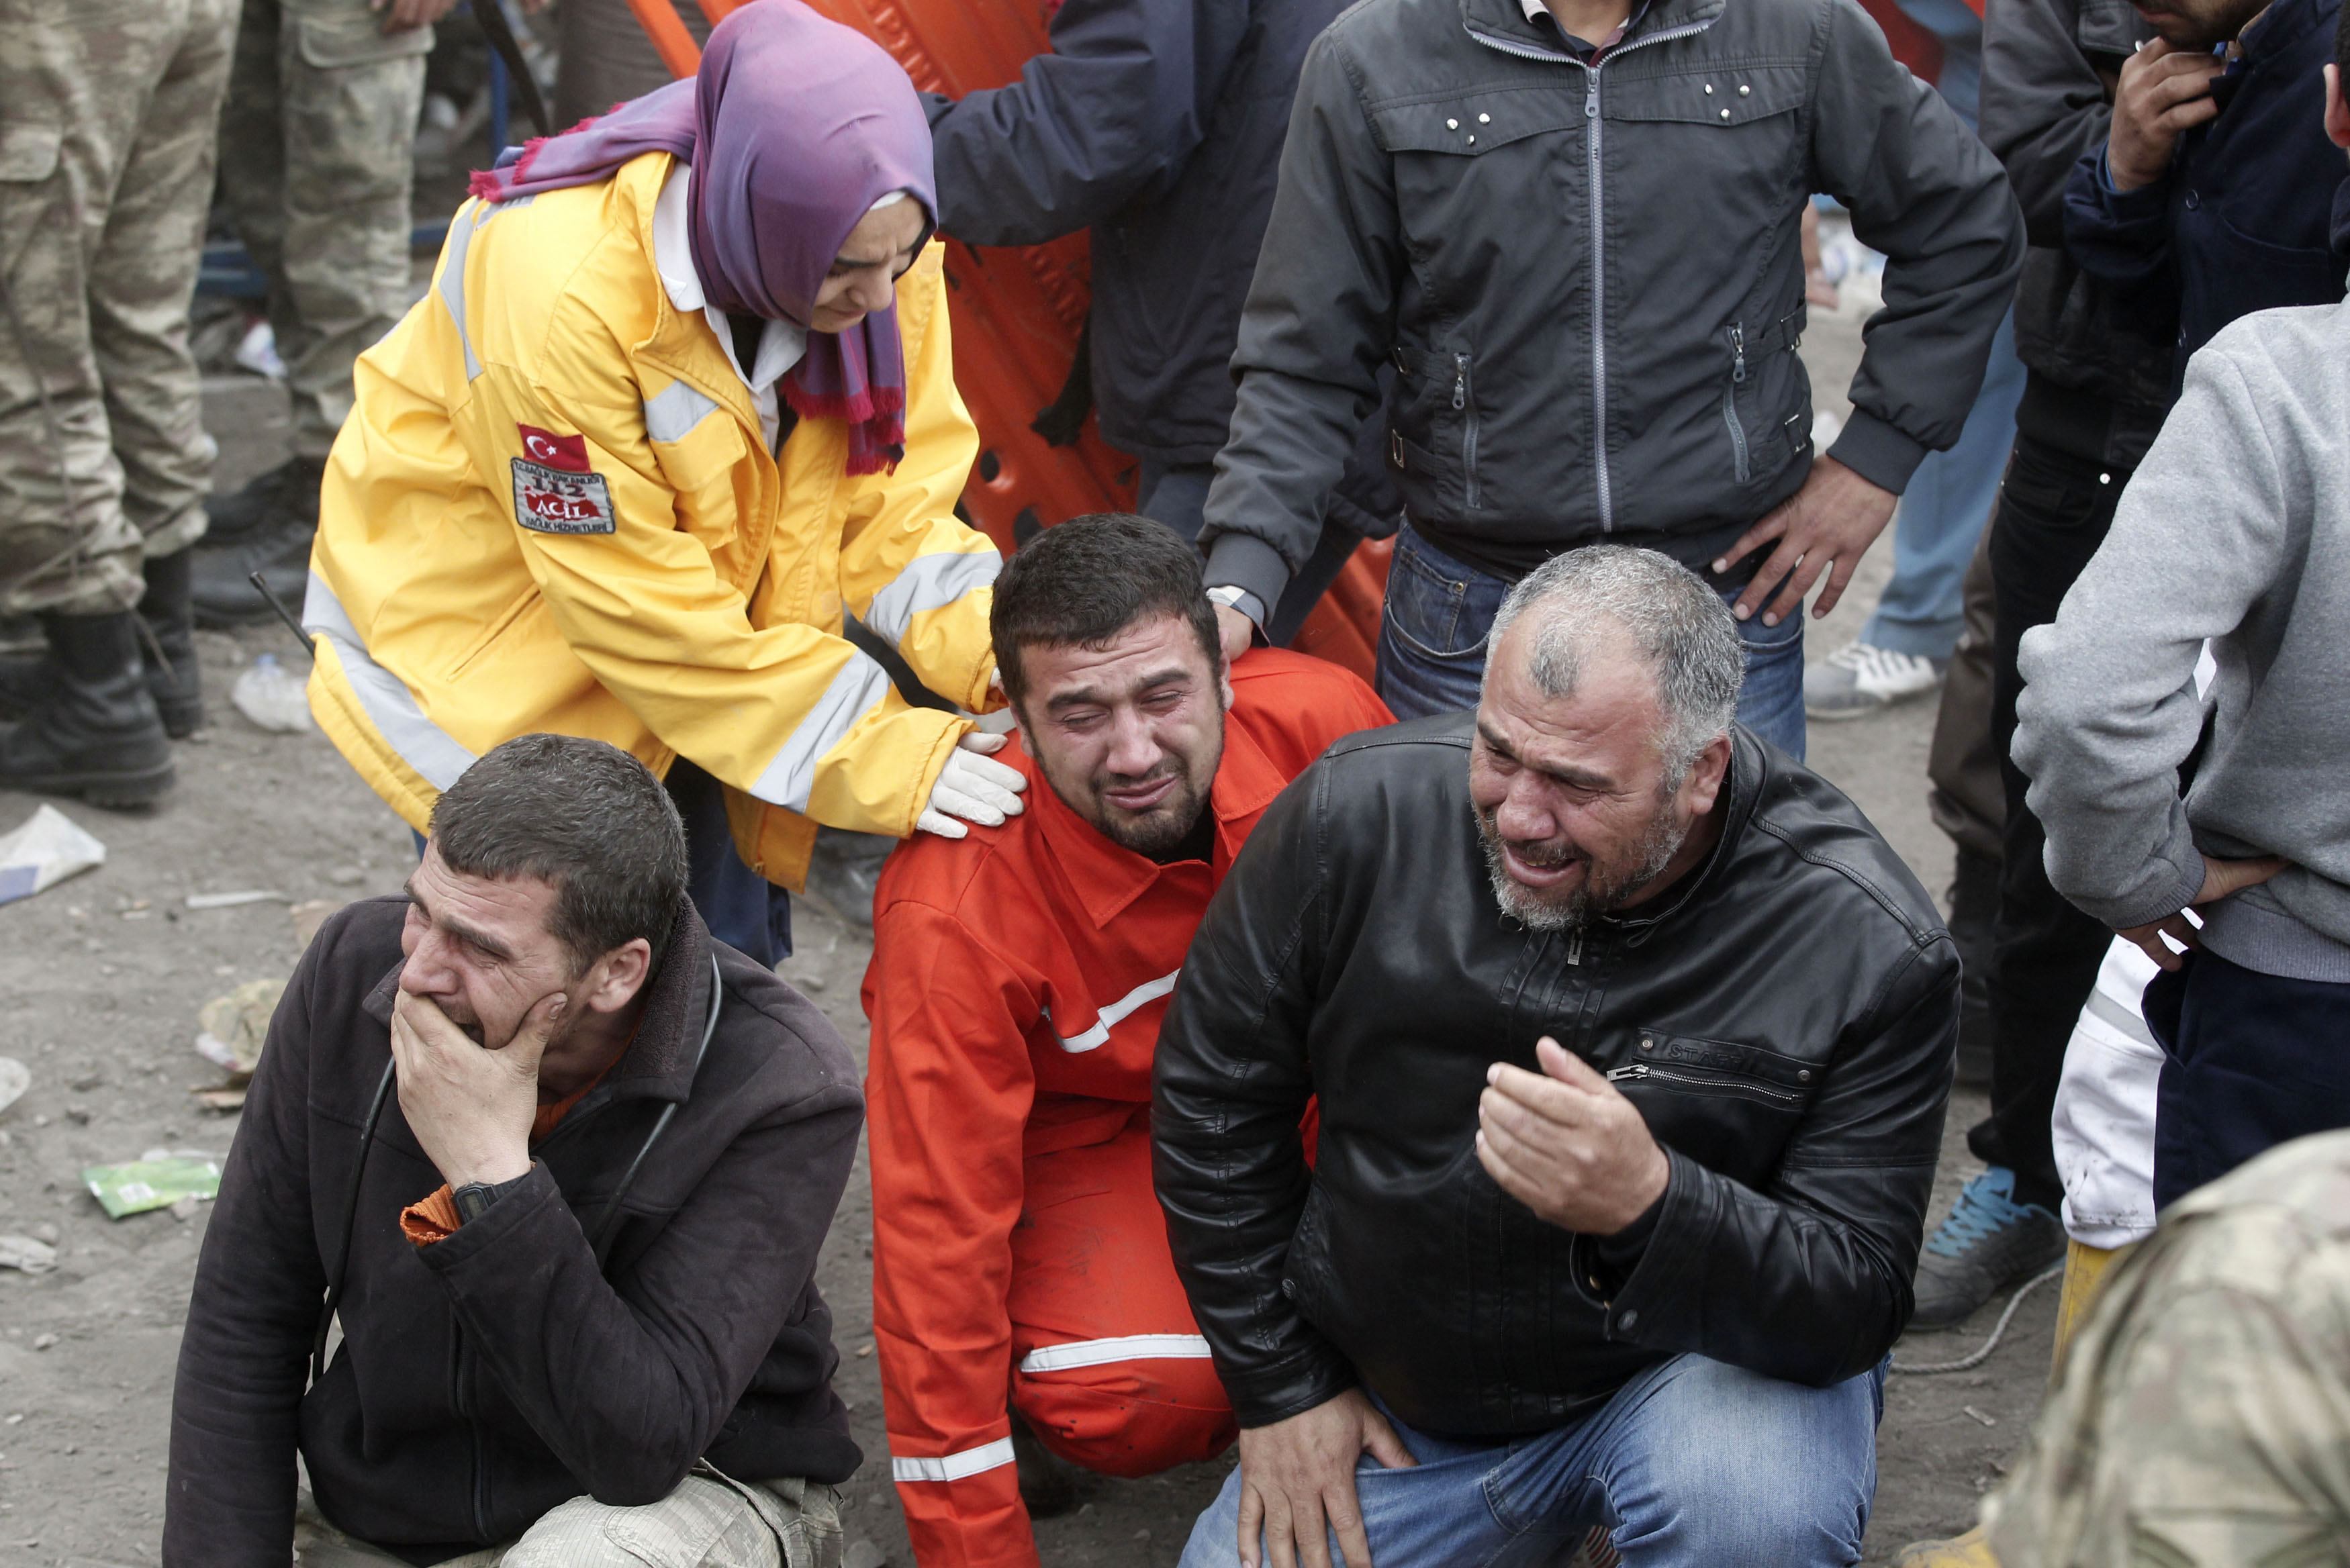 Video ντοκουμέντο! Μέσα στο ορυχείο – τάφο της Τουρκίας – Εκατοντάδες εργάτες θάφτηκαν ζωντανοί – Σβήνουν οι ελπίδες να επιζήσουν!